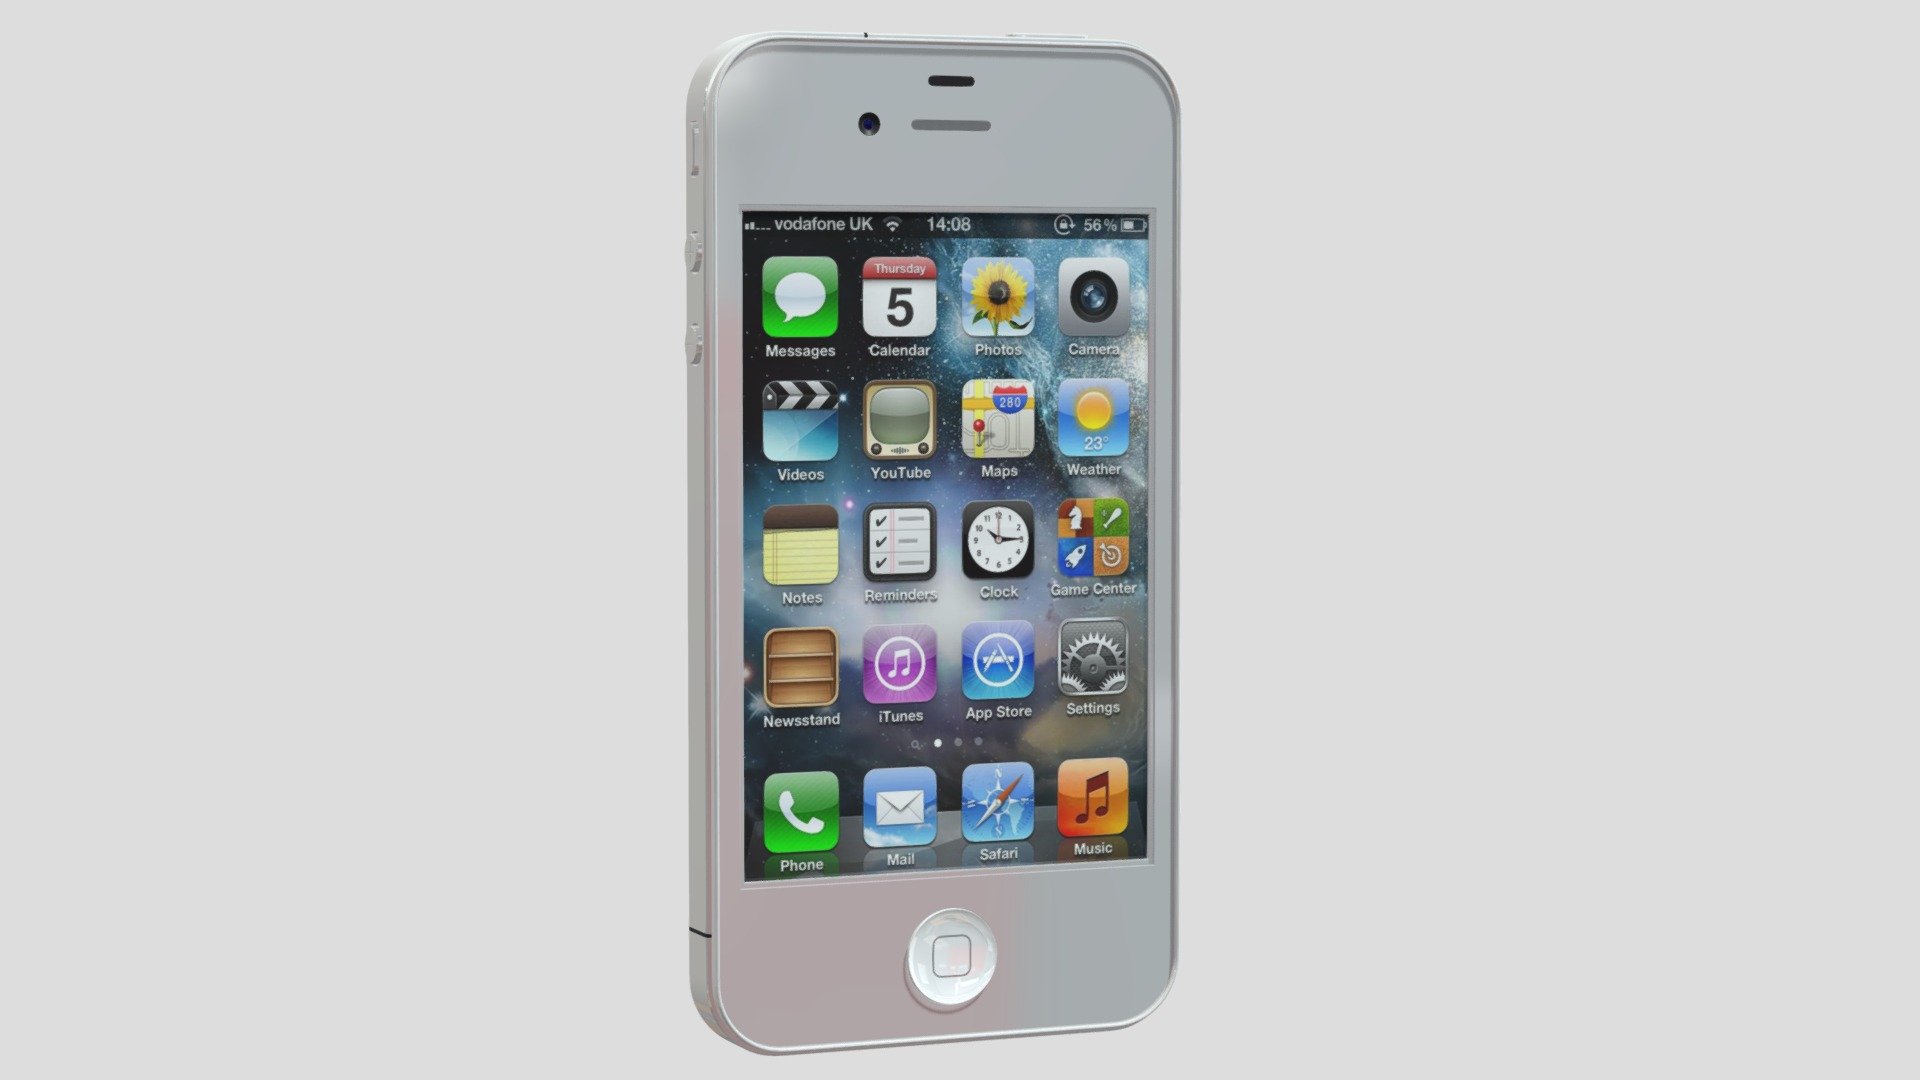 Apple iPhone 4 White